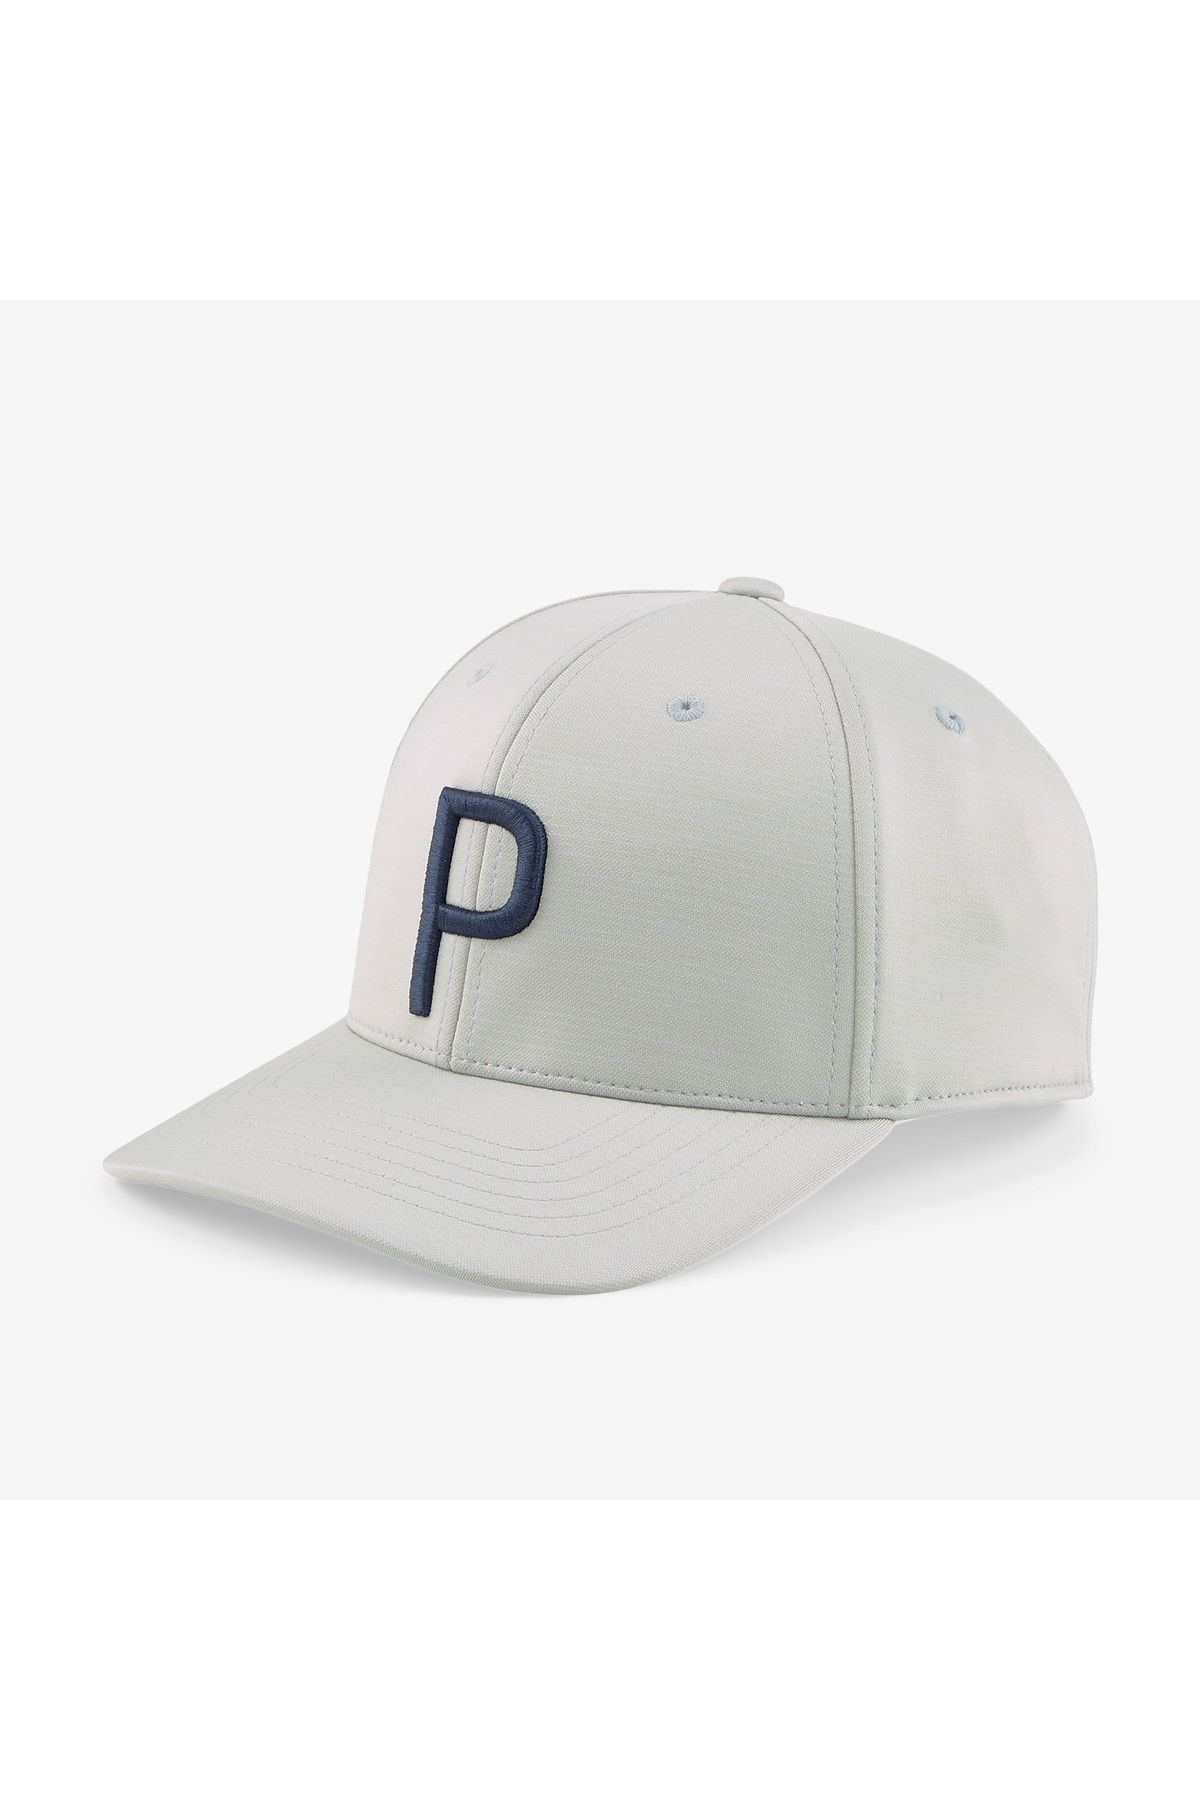 Puma Unisex Bej Golf Şapkası